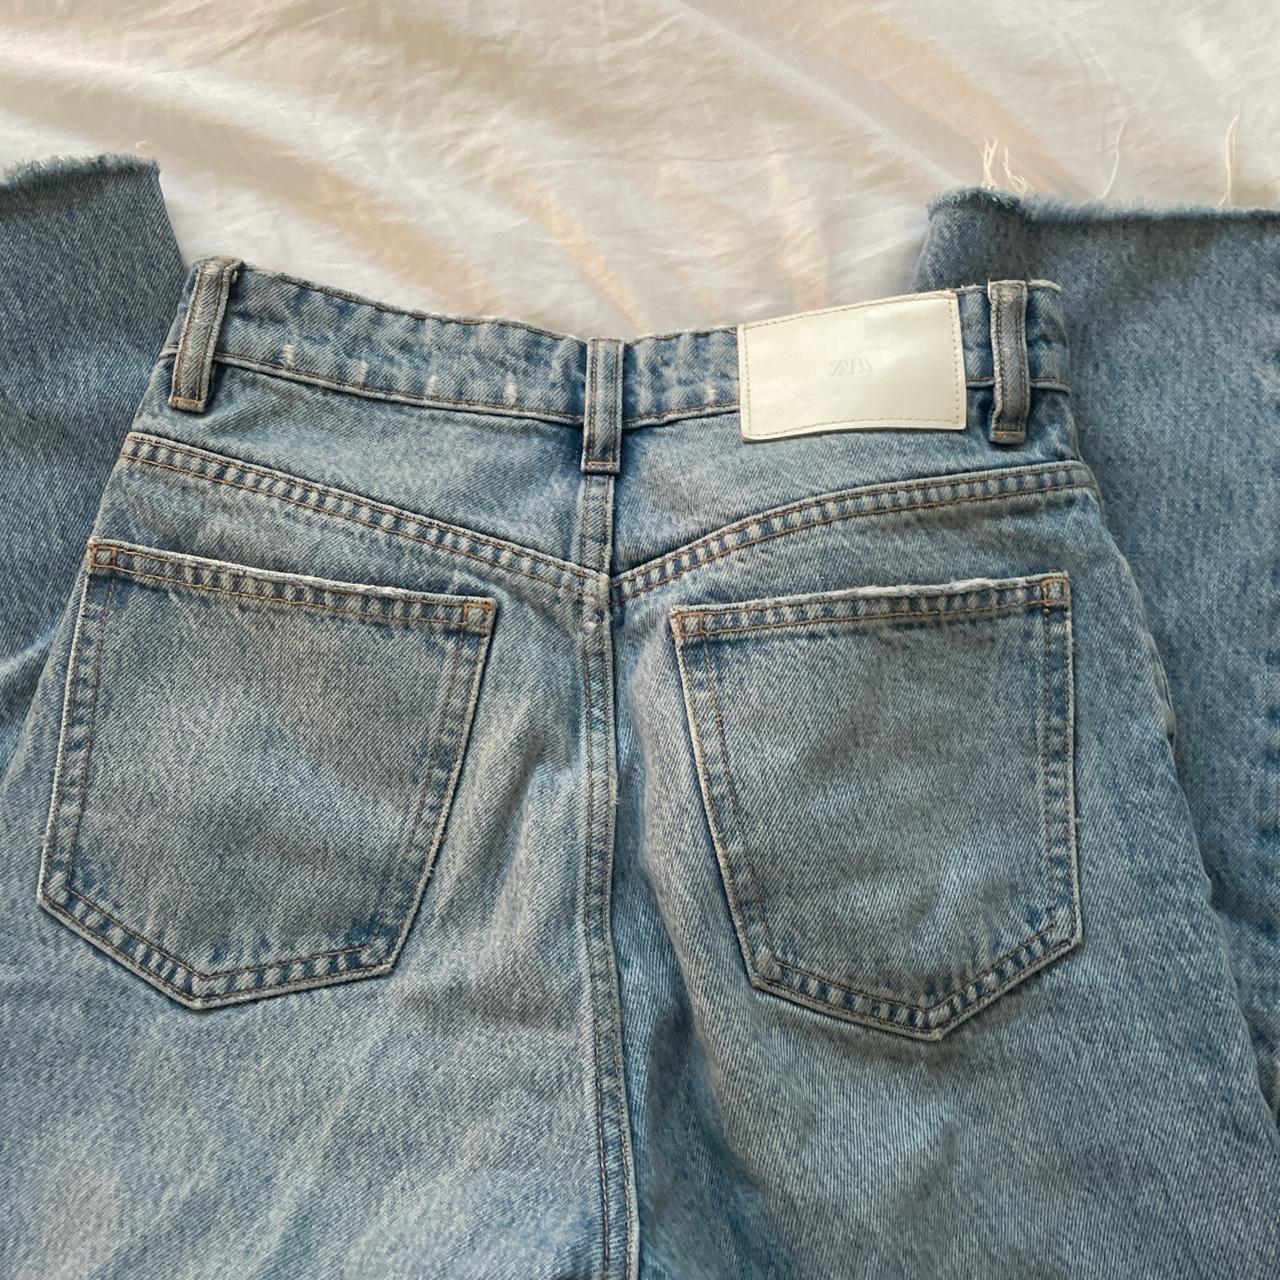 Zara denim jeans US 2! No flaws. Fits waist 24-25 - Depop